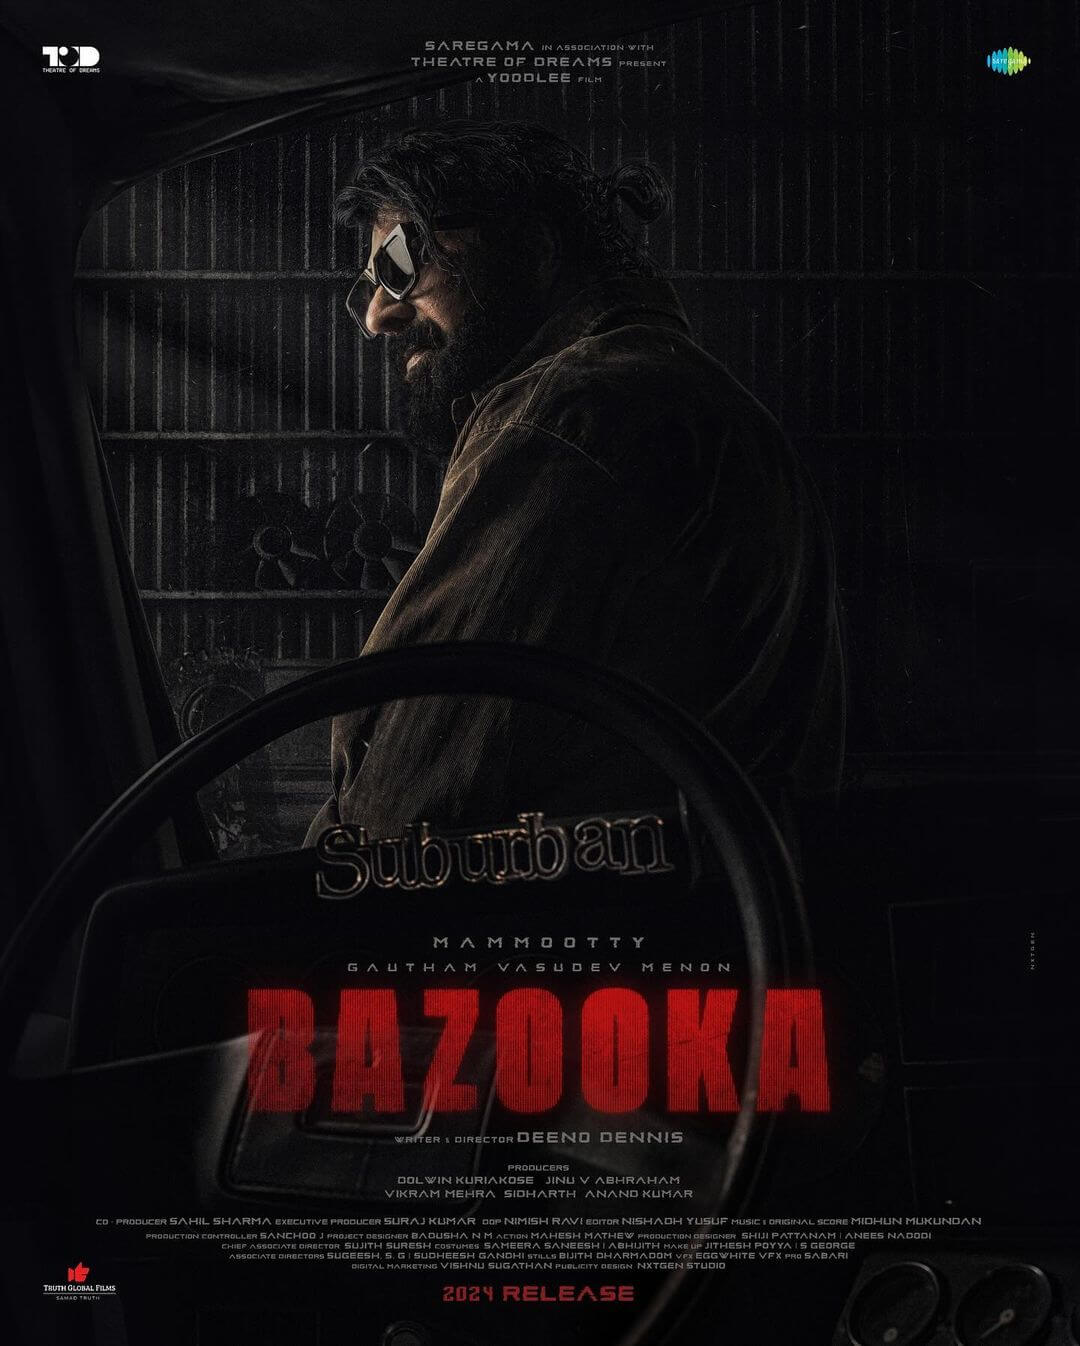 Bazooka Movie Poster